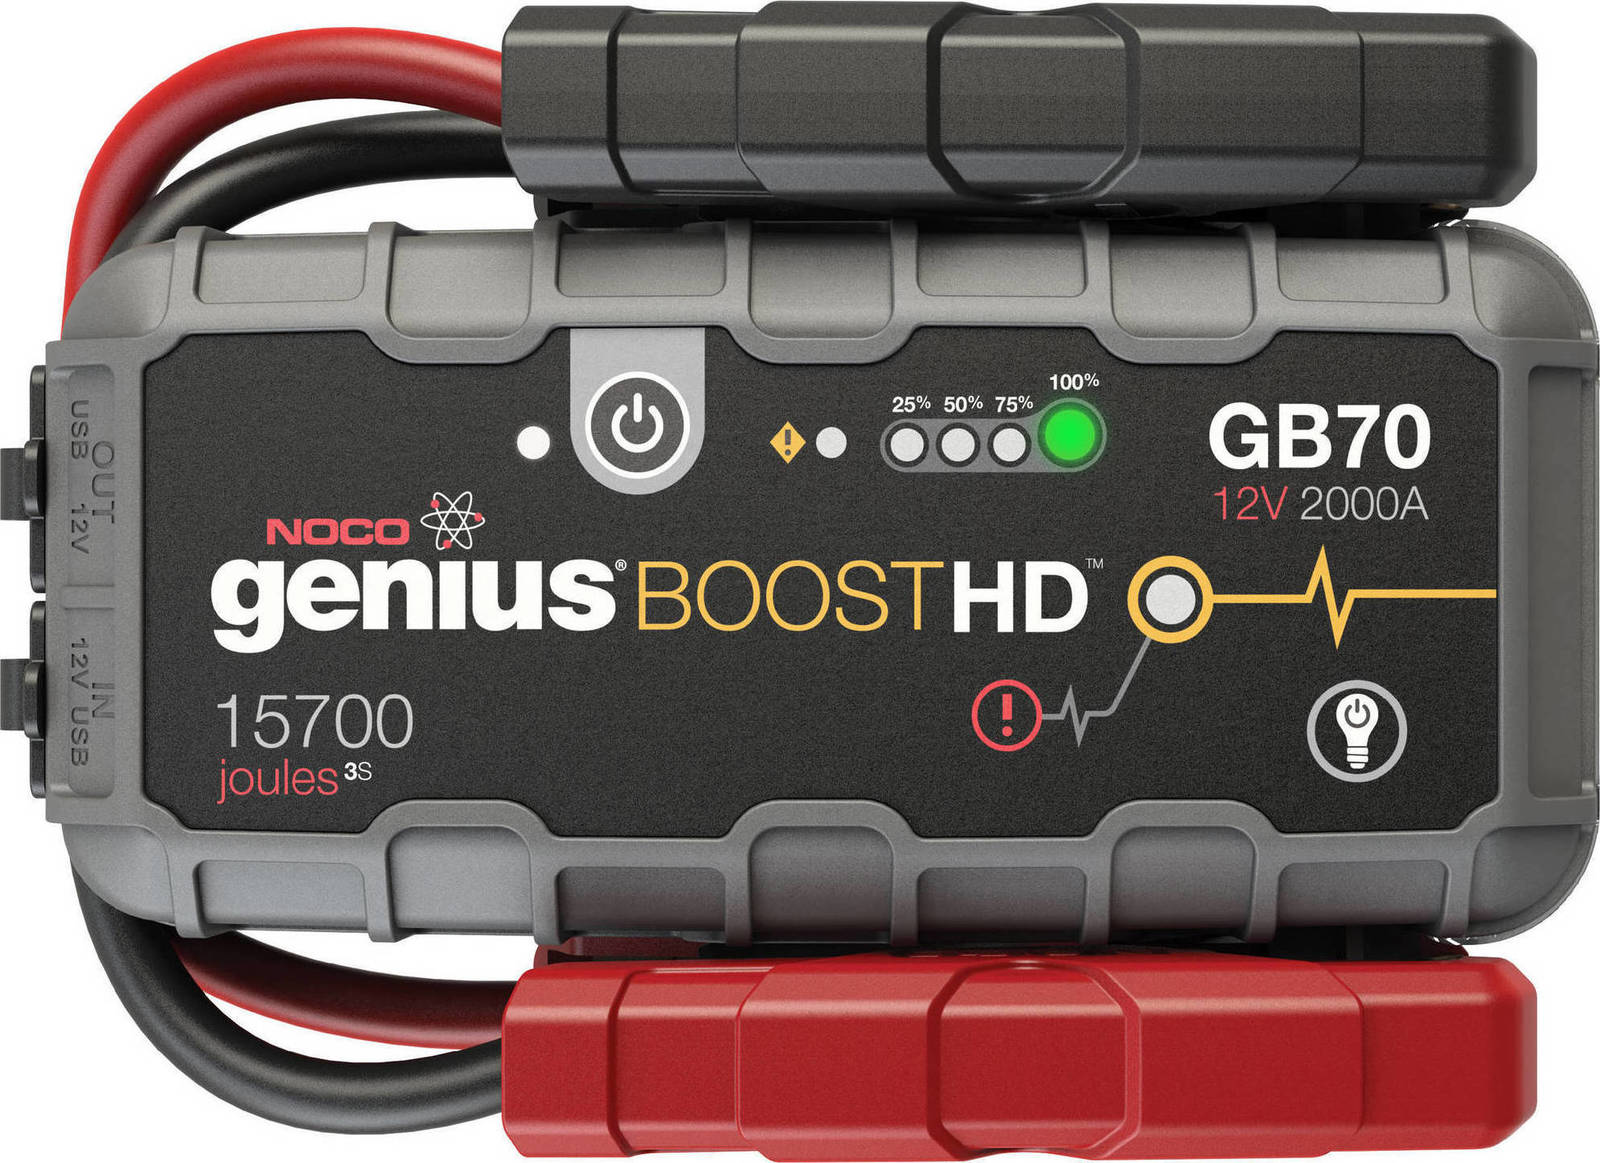 GB70 Genius Boost HD Φορητός Εκκινητής Μπαταρίας NOCO - 1